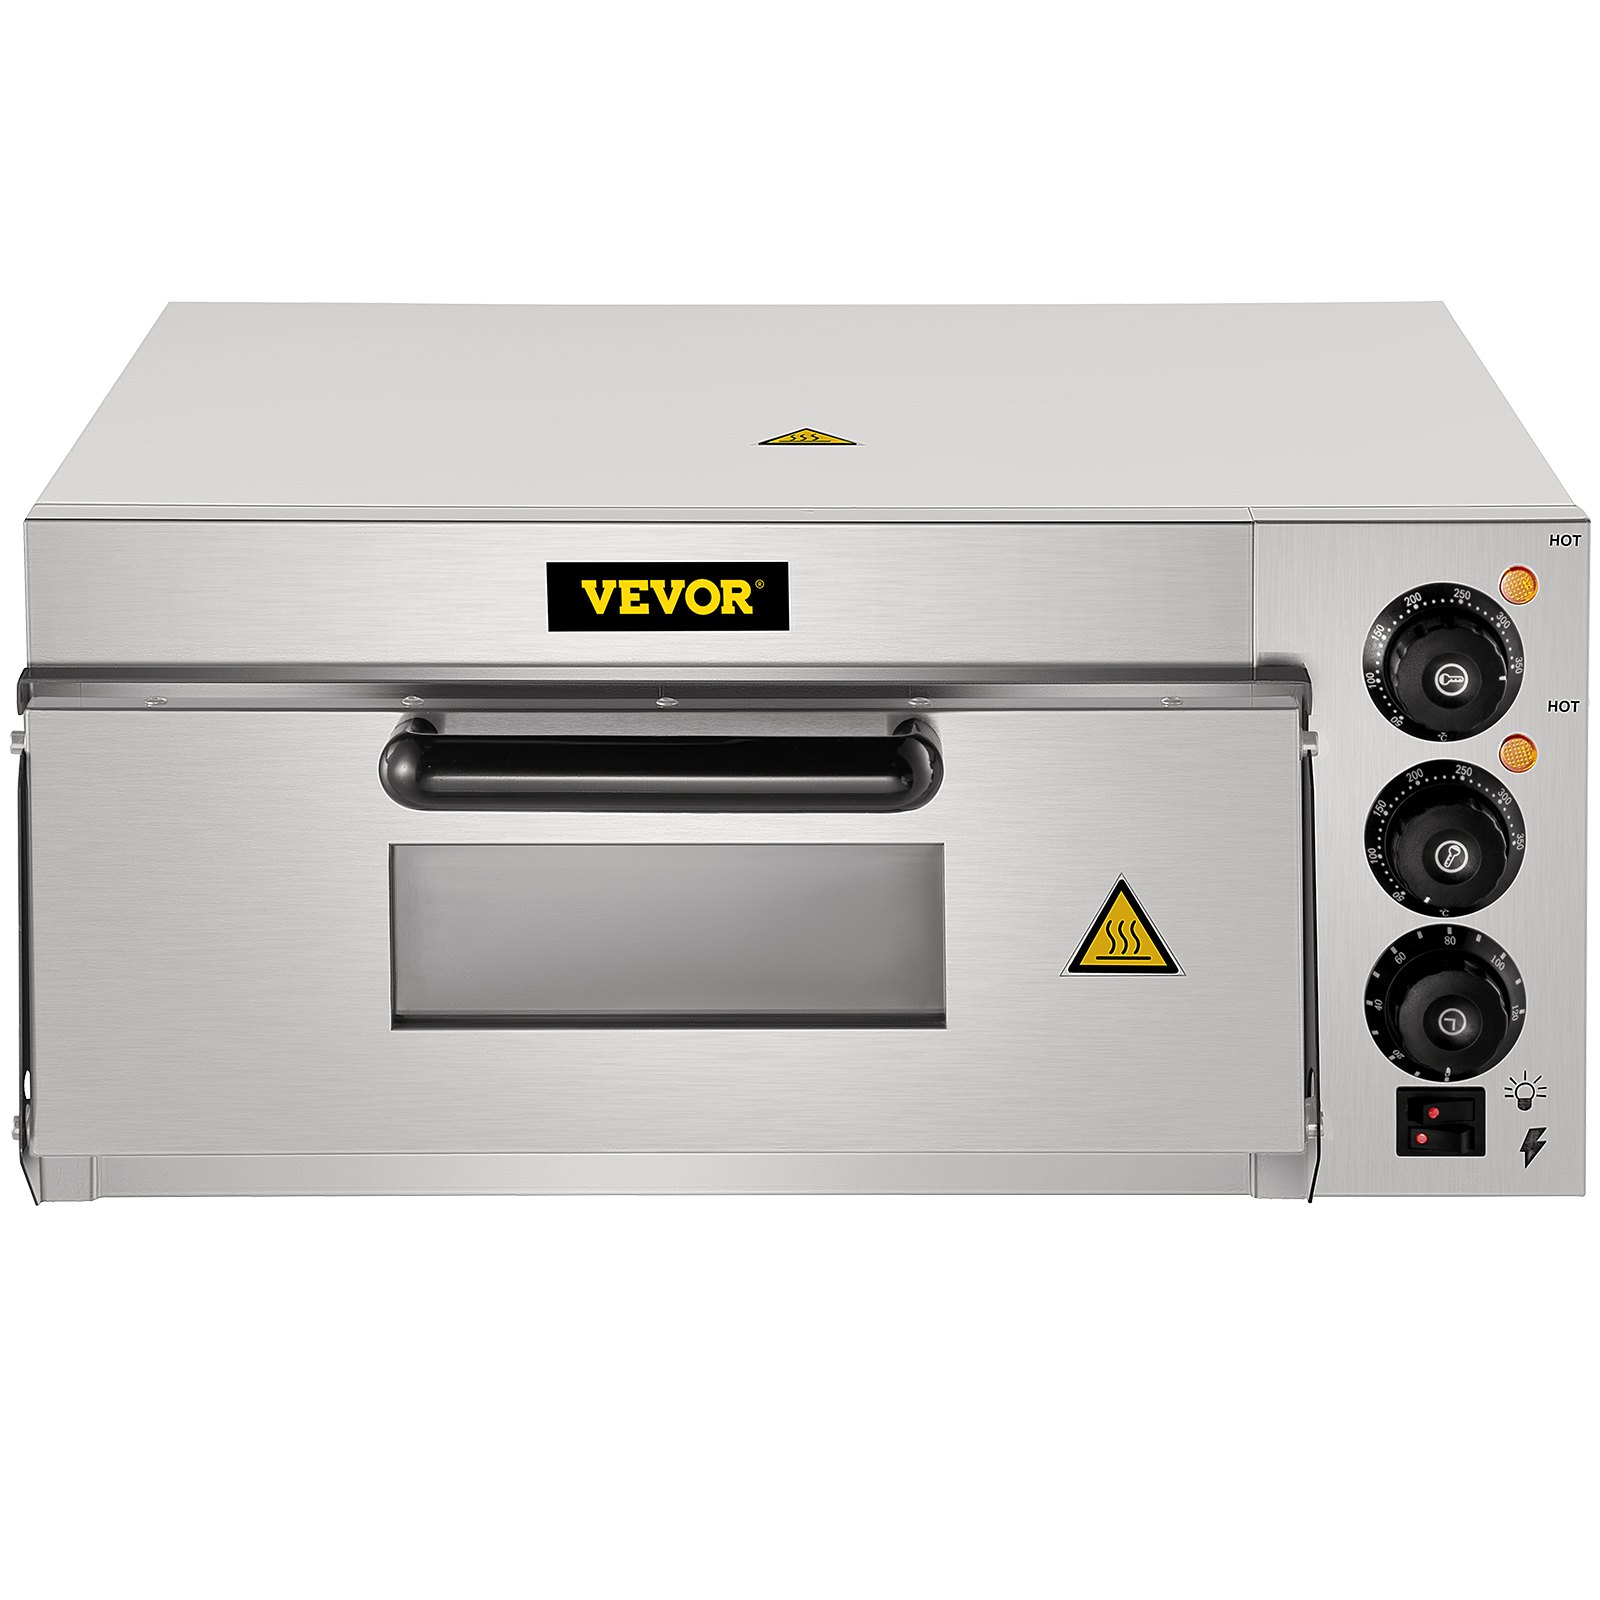 Vevor Vevor Commercial Pizza Oven Countertop 14 Single Deck Layer 110v 1300w Stainless Steel 7328